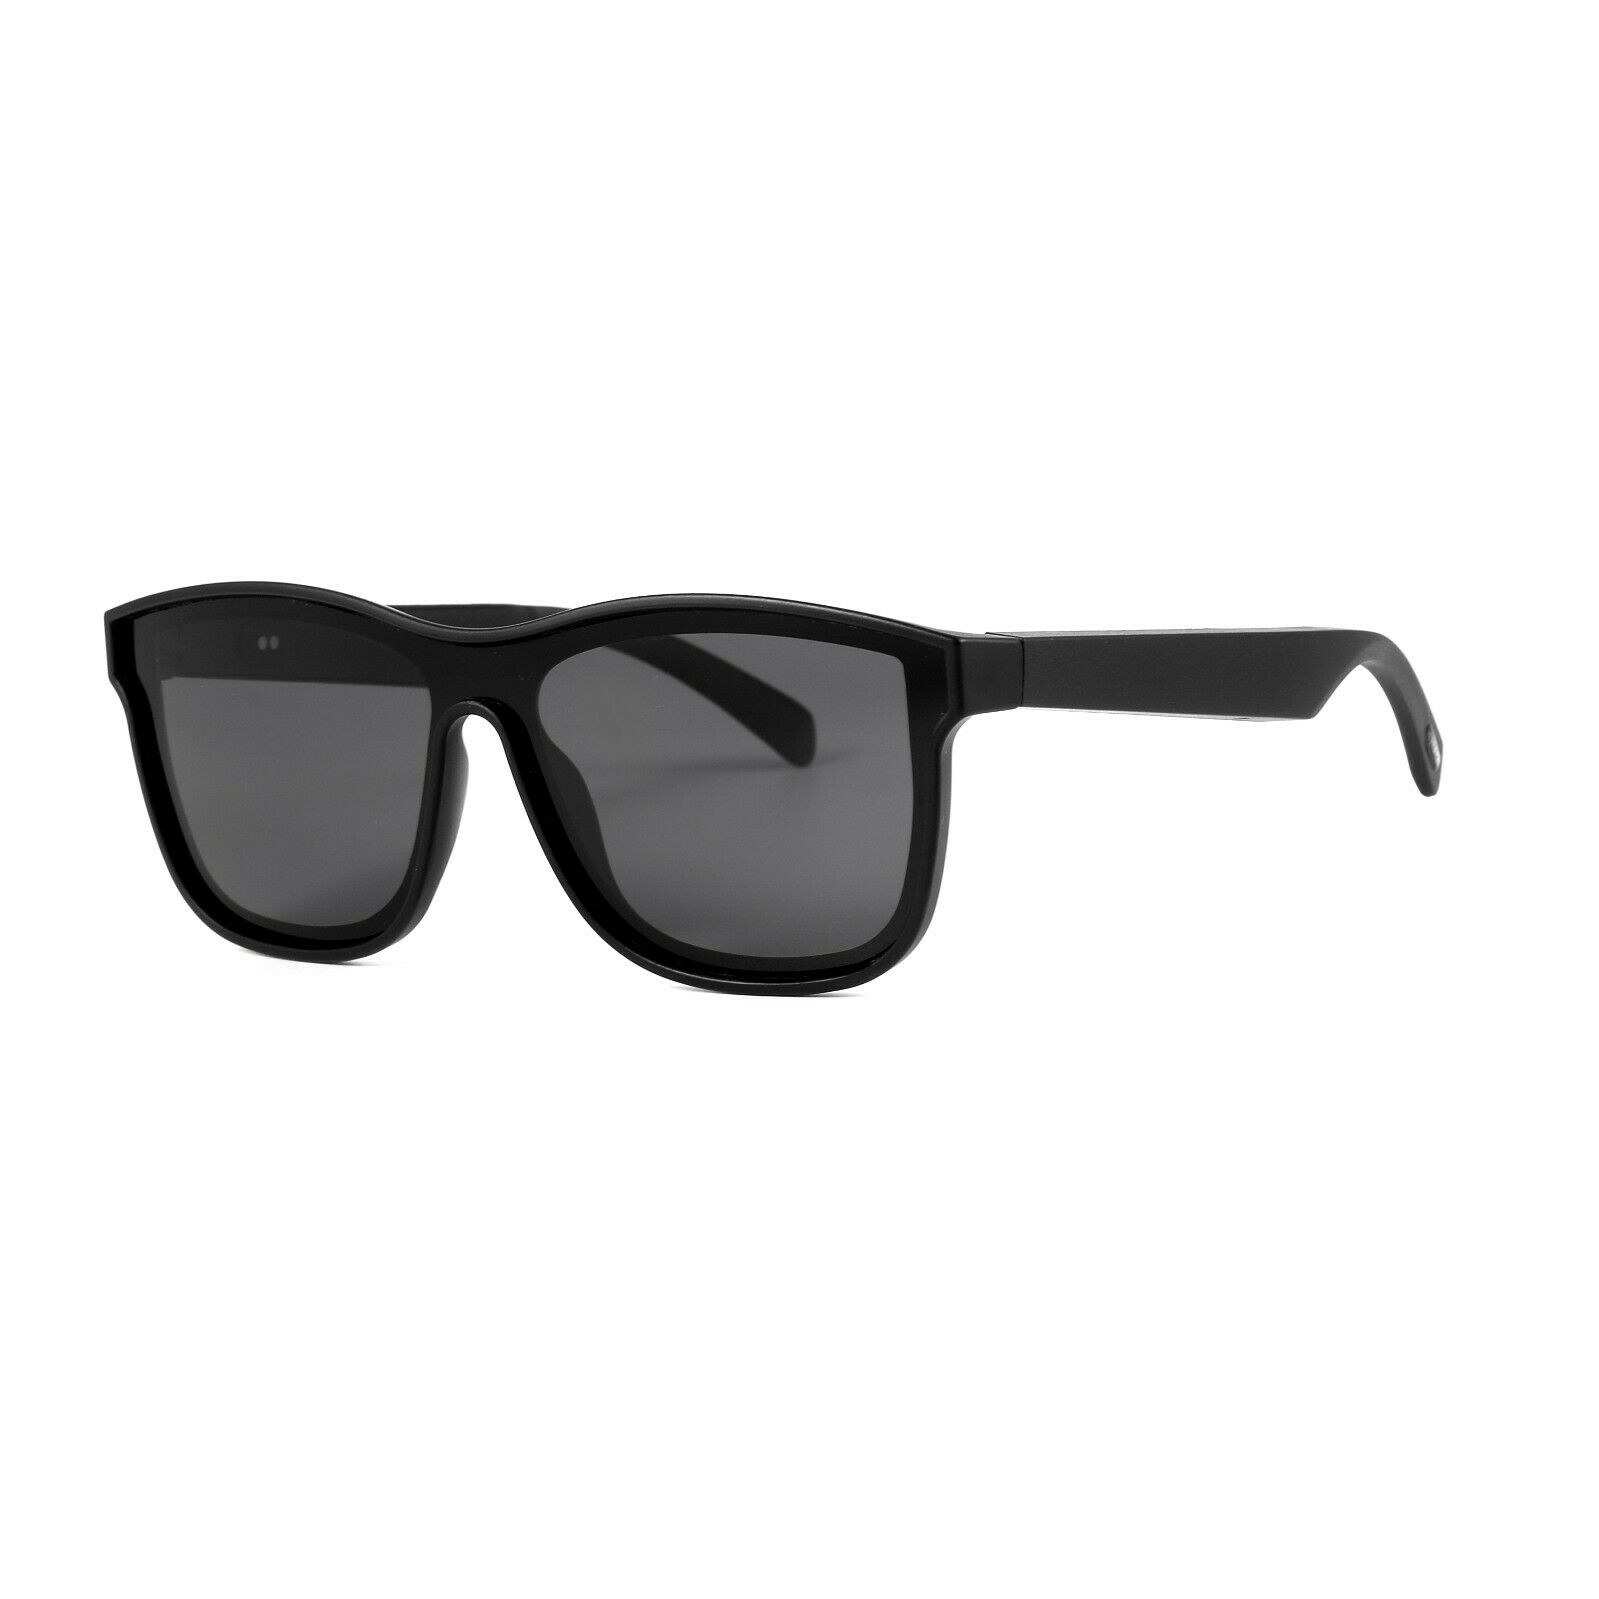 Bluetooth Audio Glasses For Men Women, Smart Sunglasses Support Music Calls